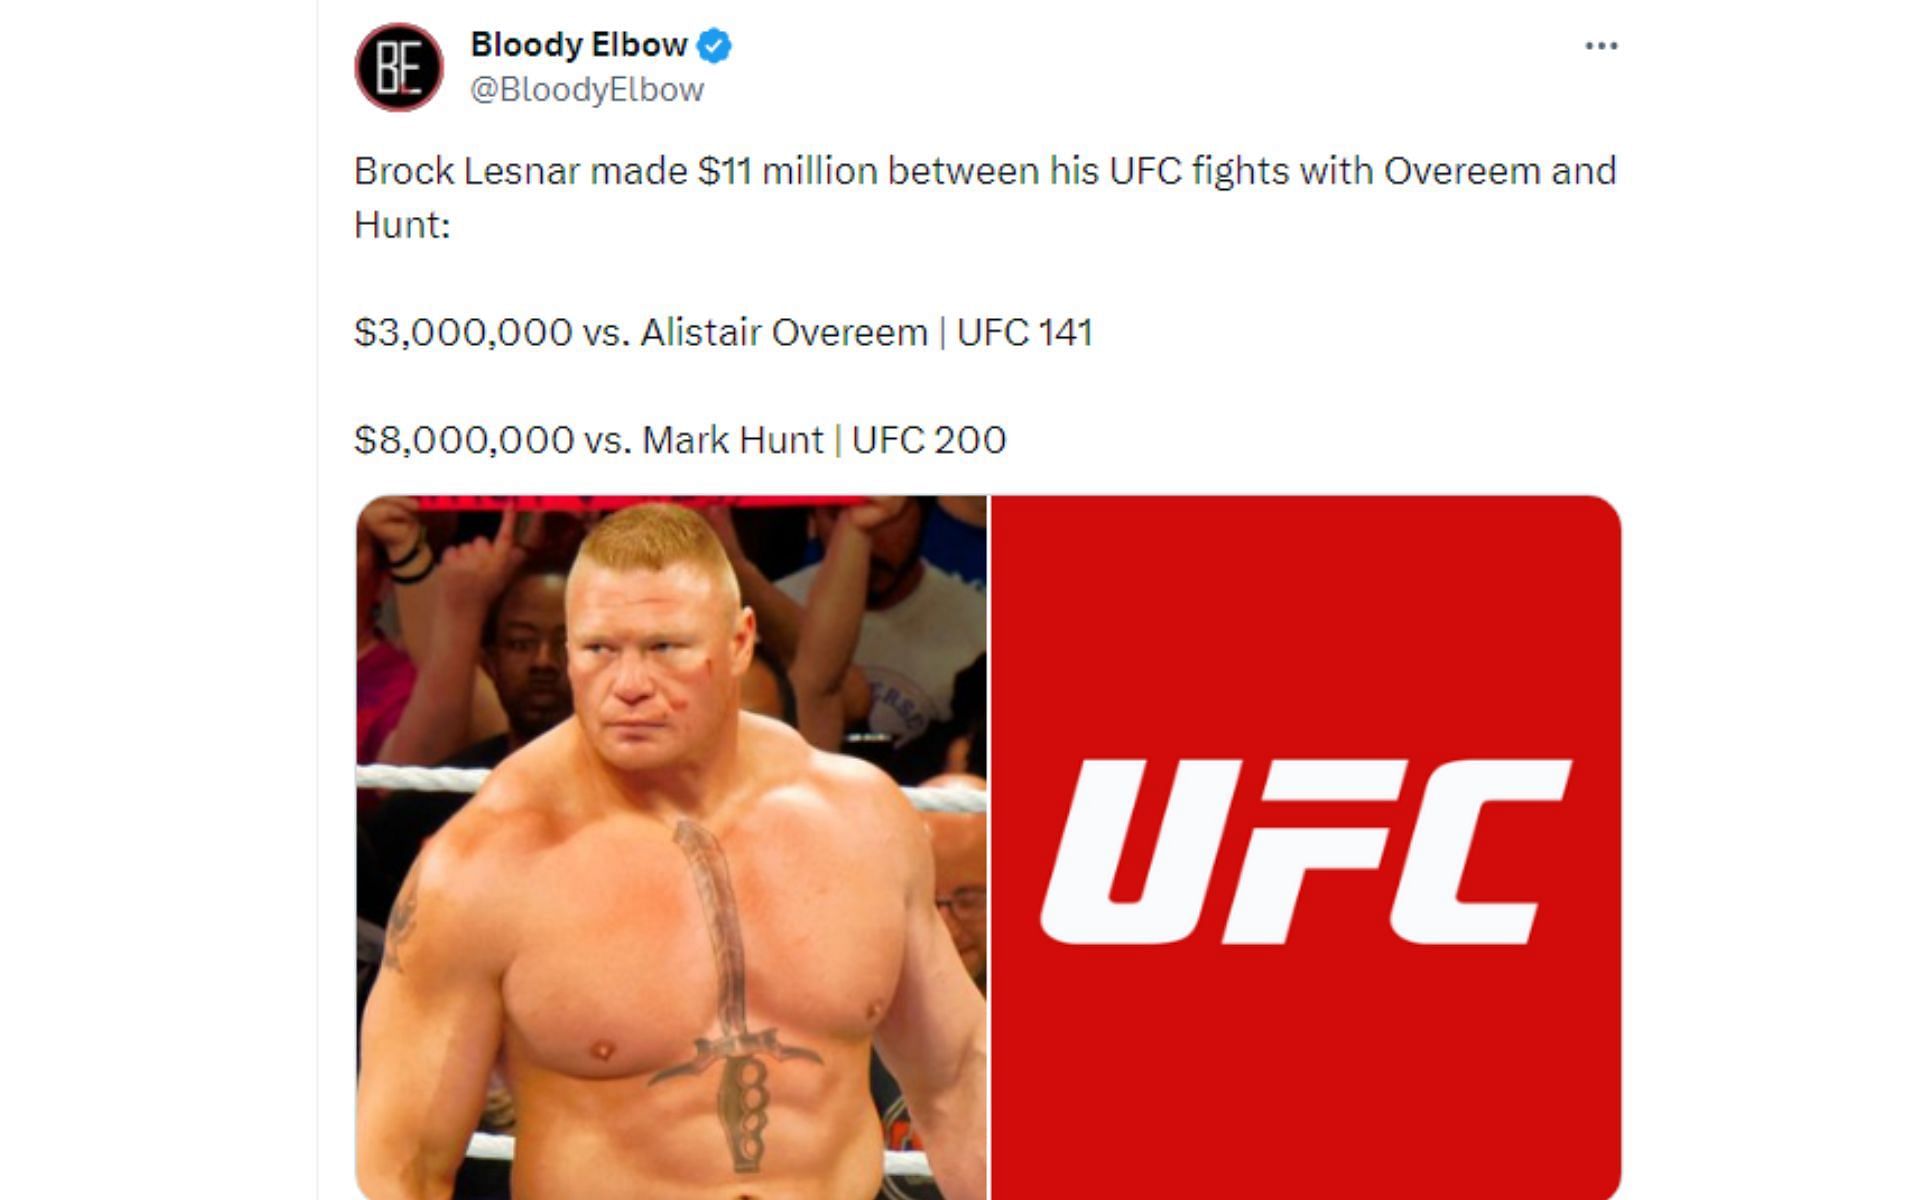 Bloody Elbow tweet regarding Lesnar&#039;s UFC fight purse